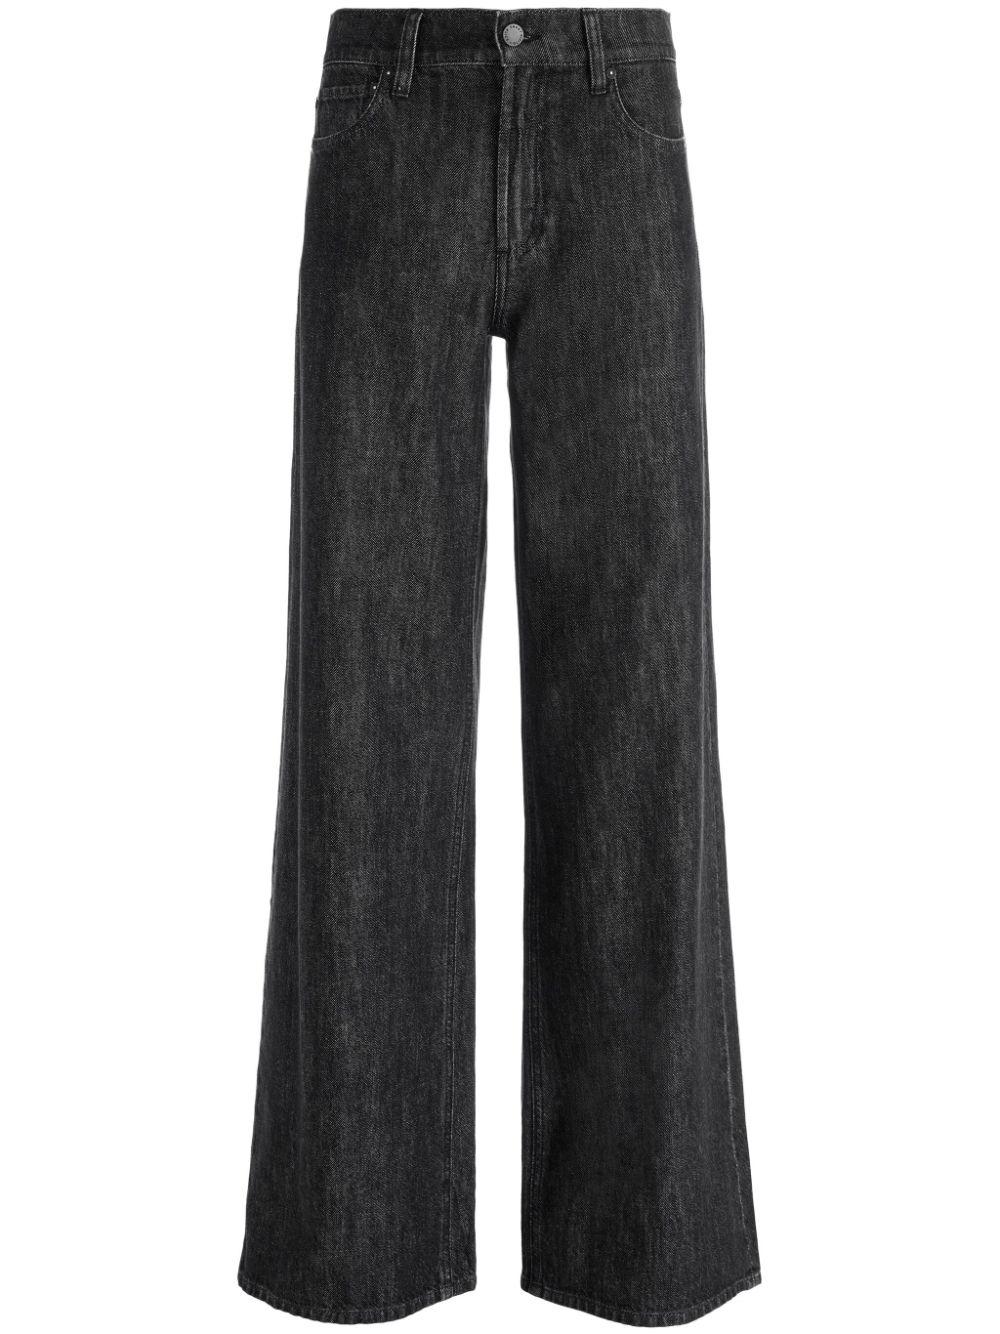 Alice + Olivia Trish Low-rise Wide-leg Jeans in Black | Lyst